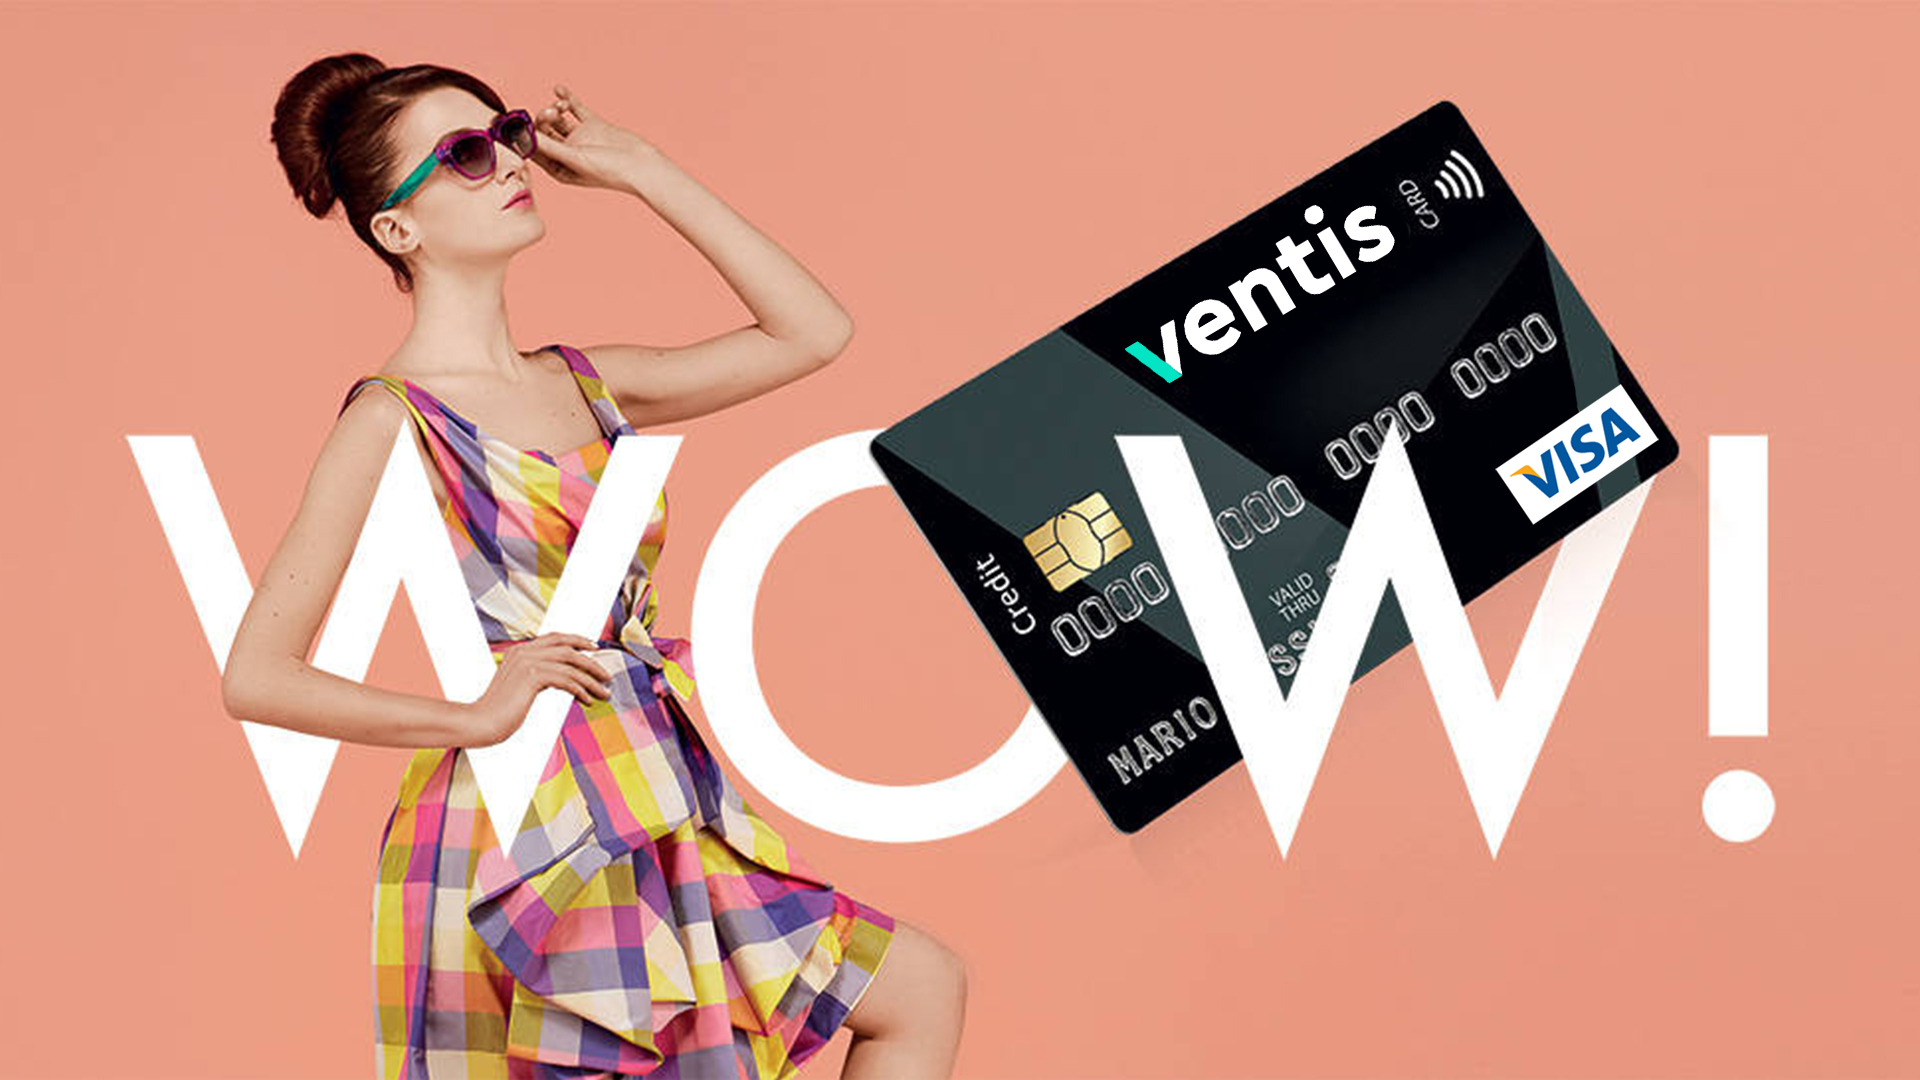 Ventis Card